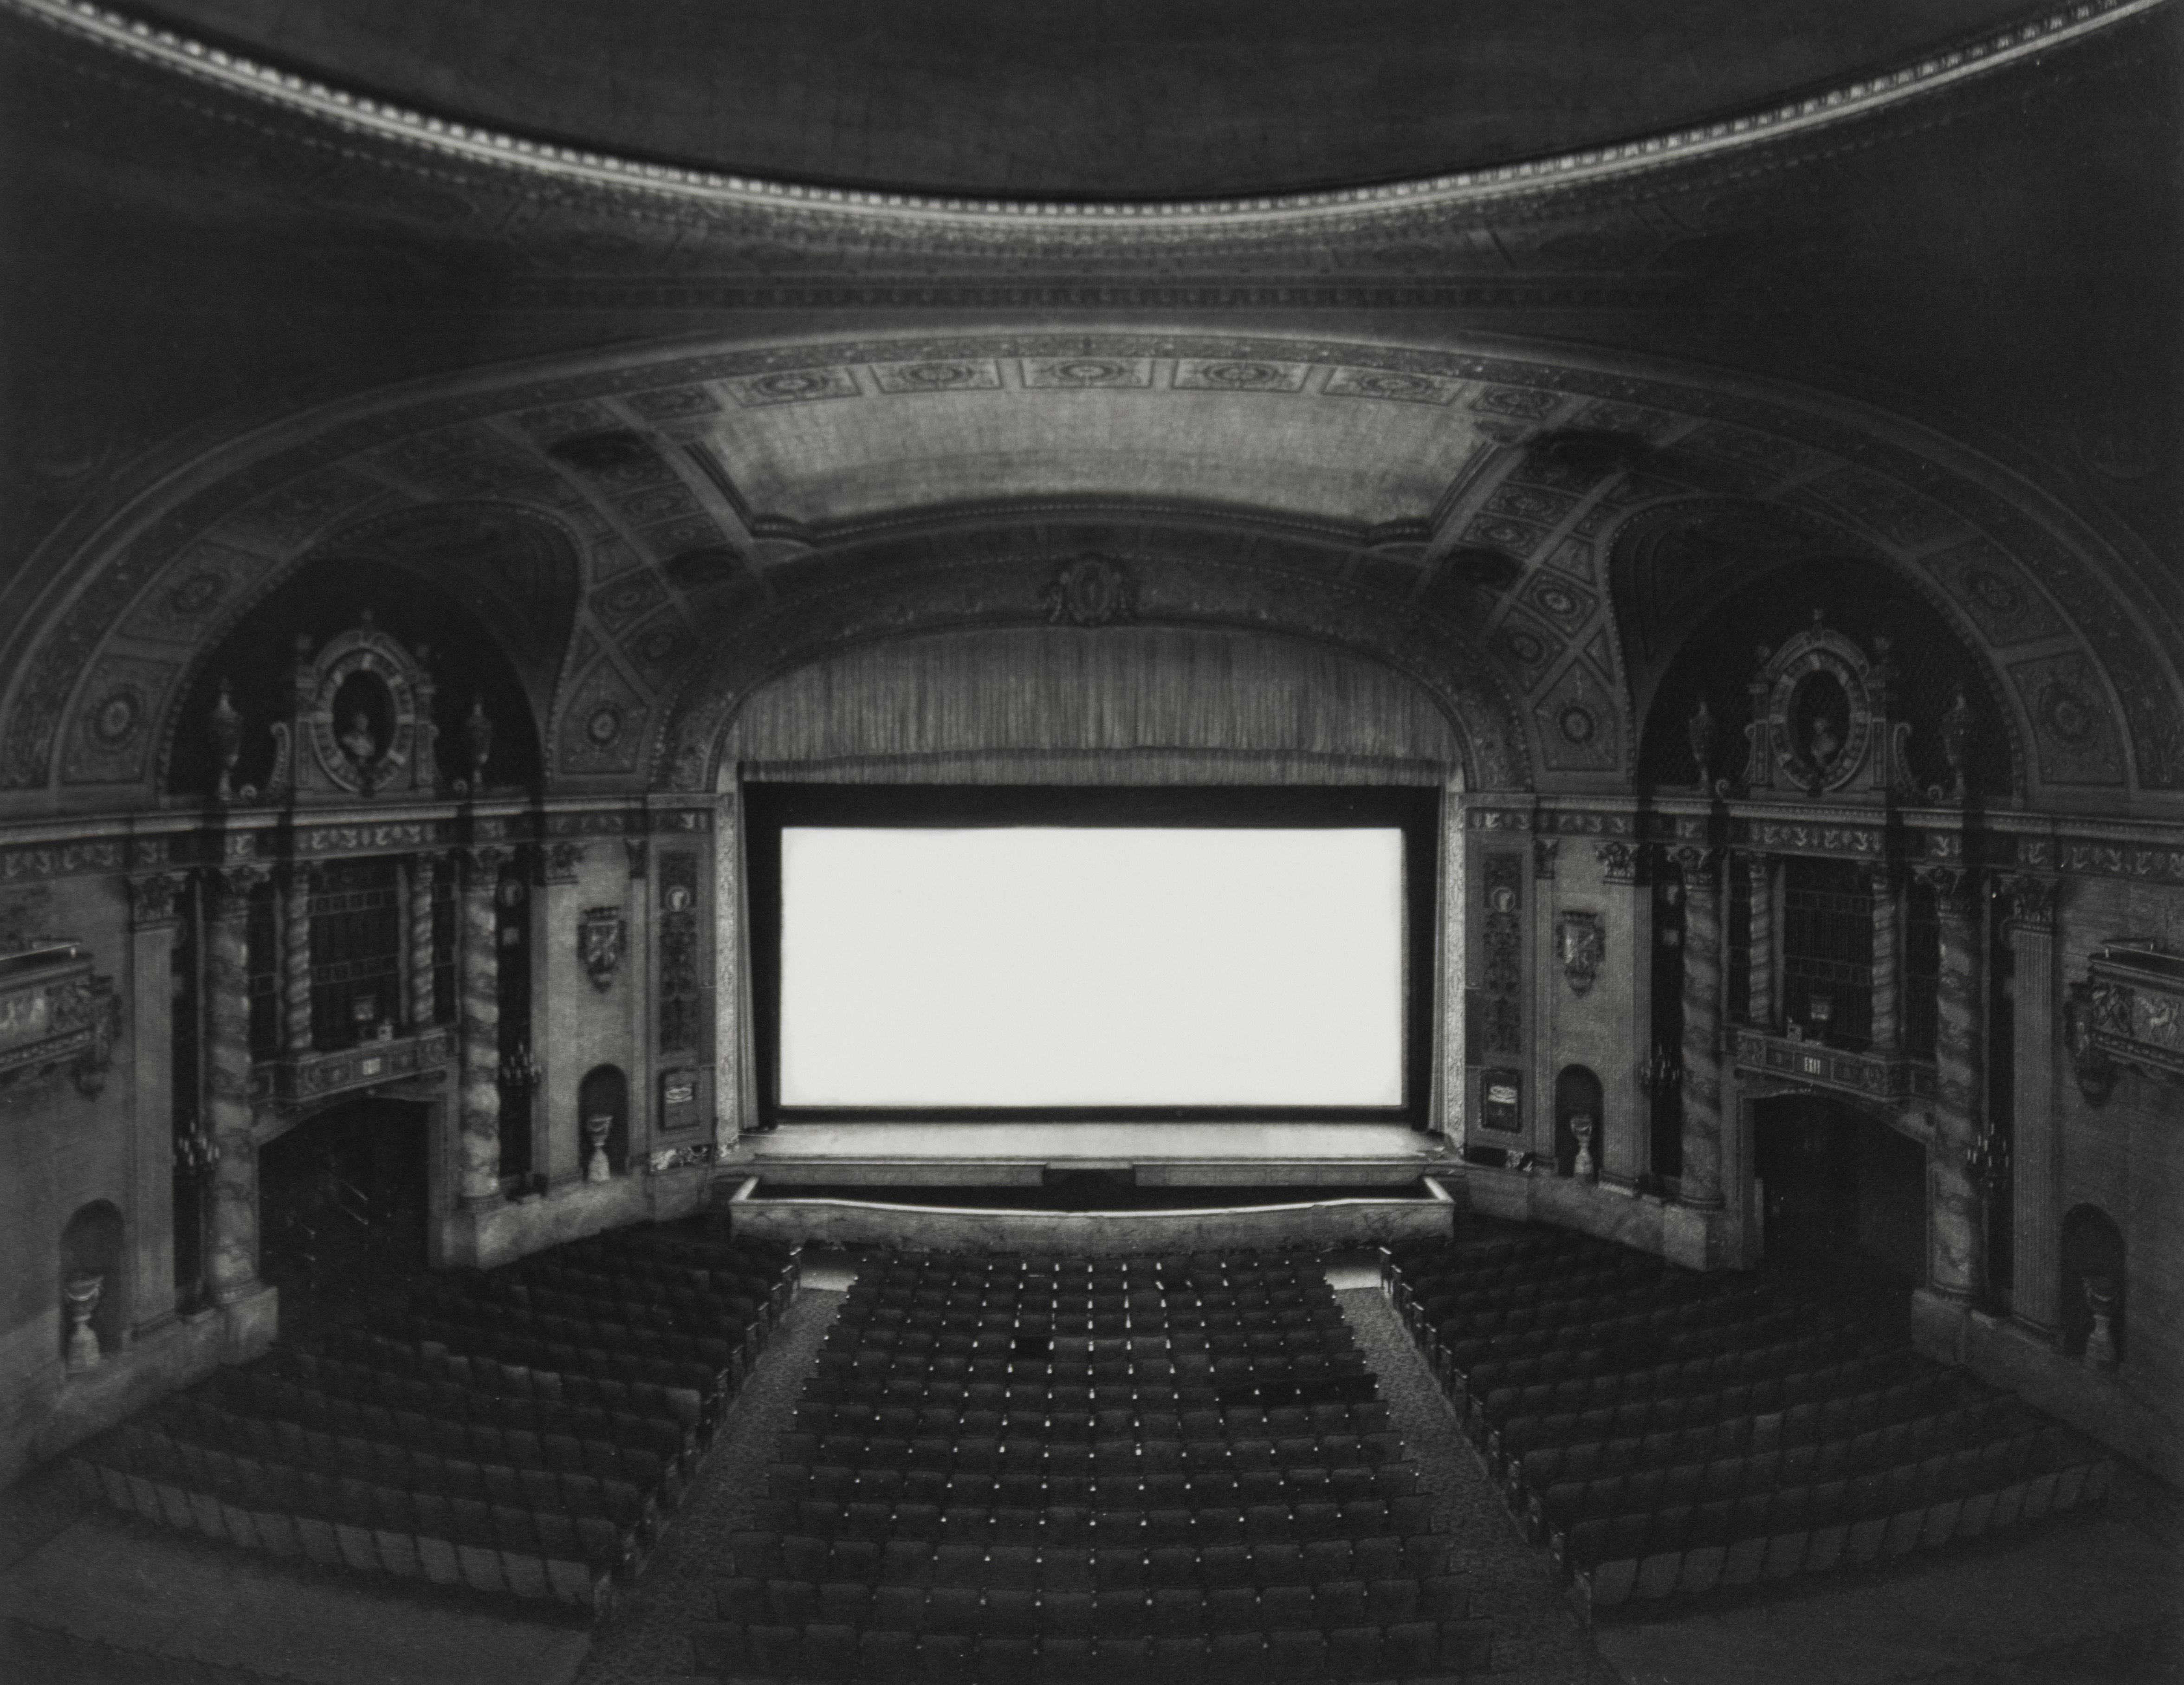 Theatres - Photograph by Hiroshi Sugimoto